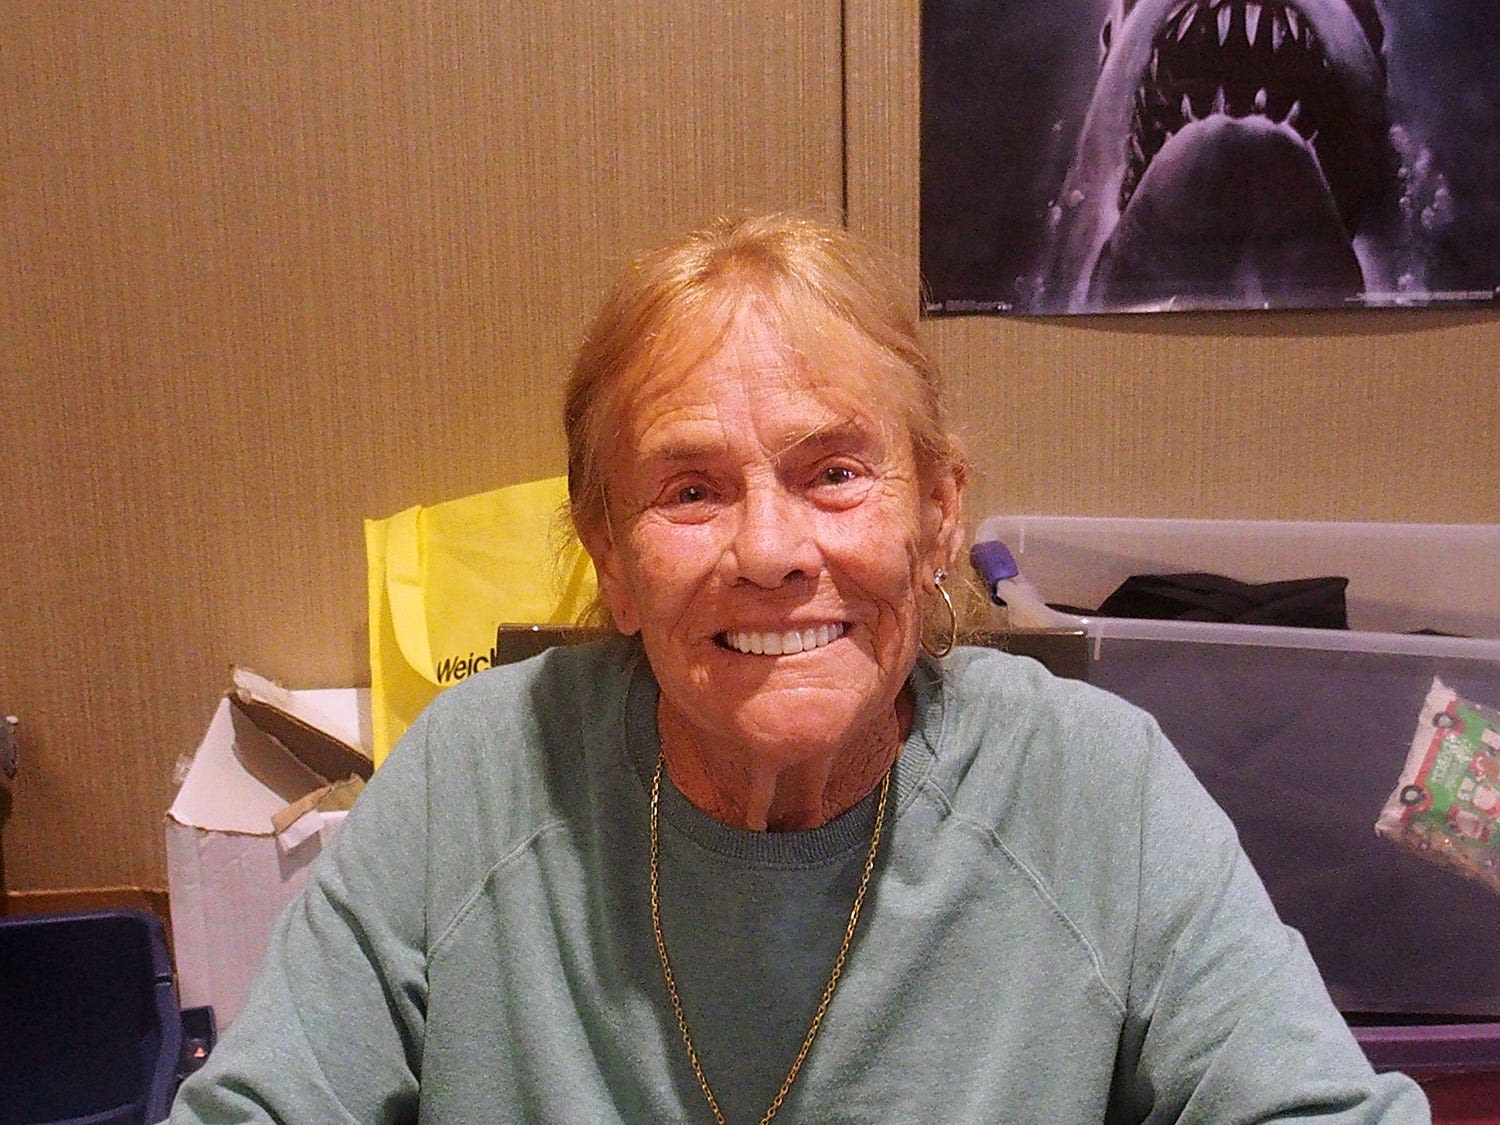 Susan Backlinie, who played shark victim Chrissie Watkins in 'Jaws,' dies at 77: Reports